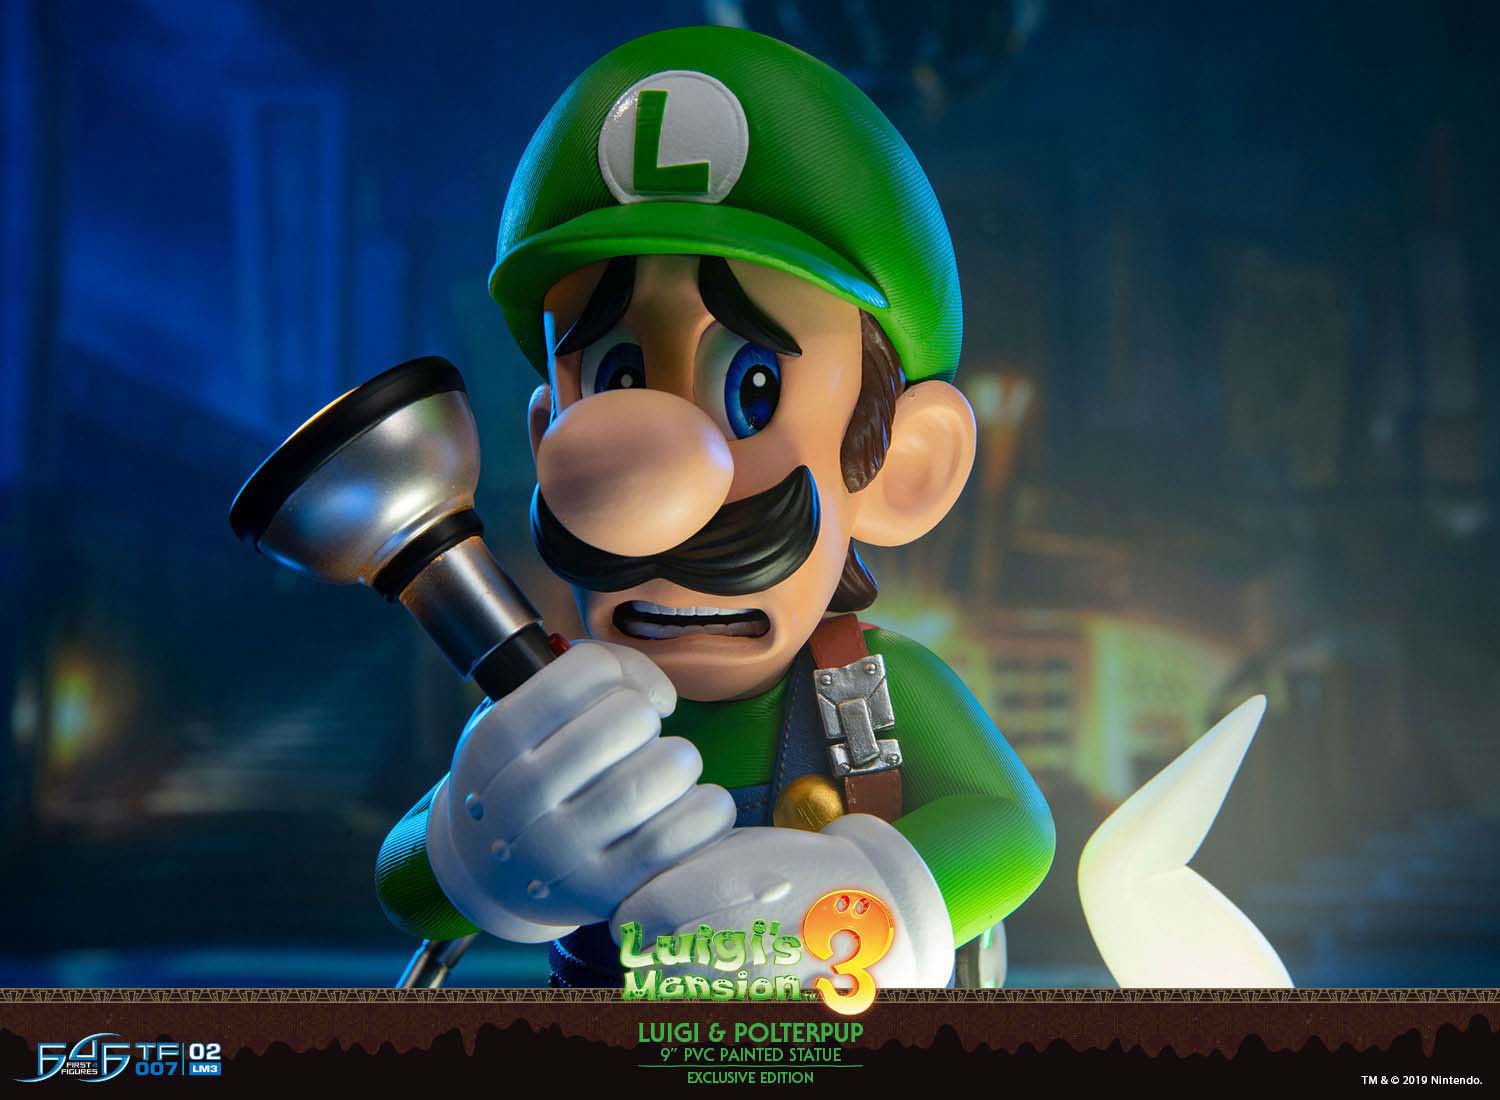 Luigi's Mansion 3 – Luigi and Polterpup Exclusive Edition